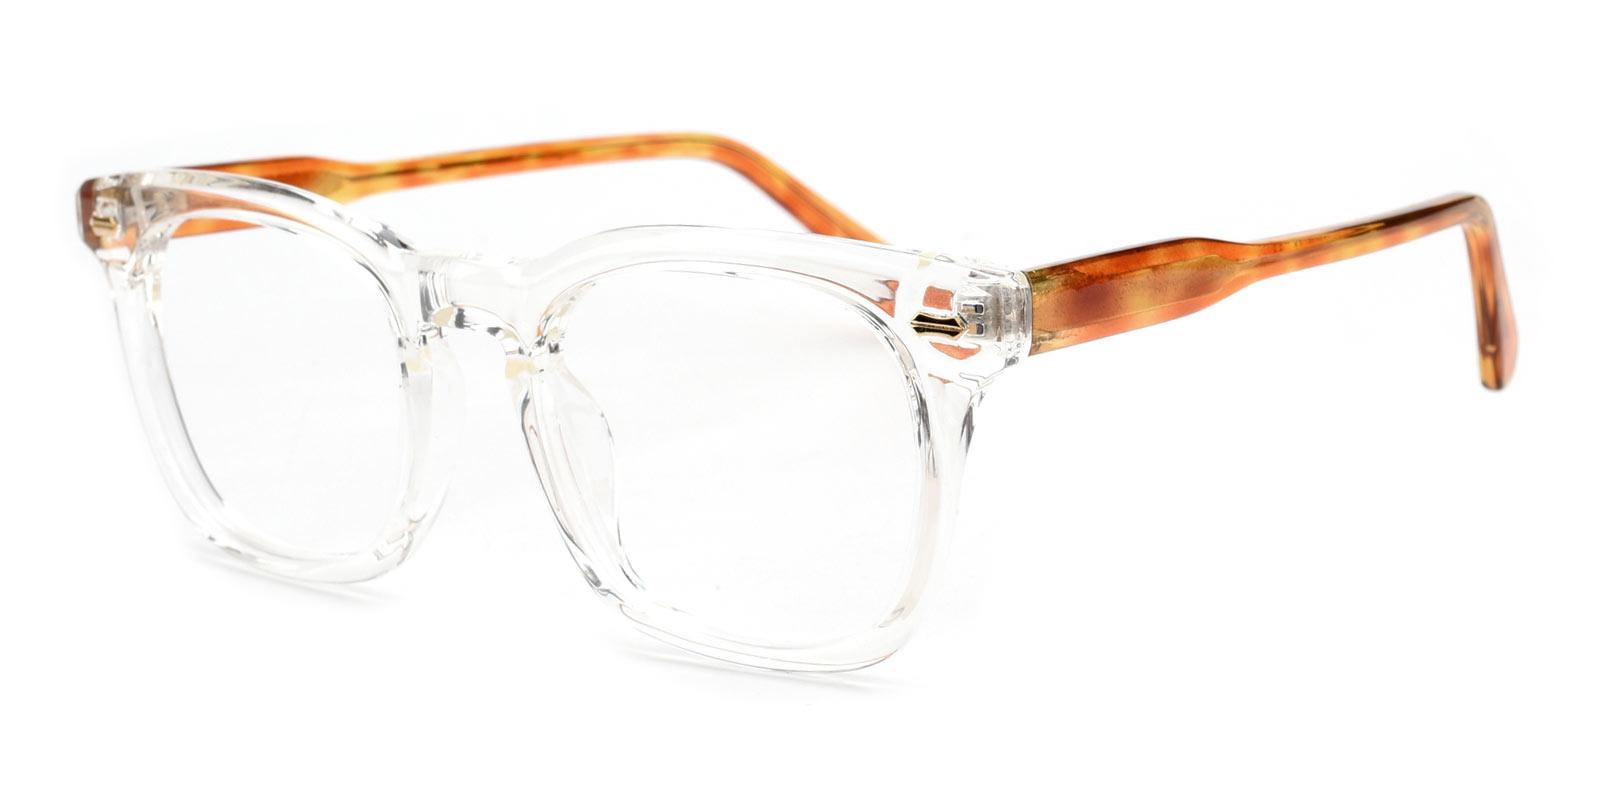 Pedro-Translucent-Rectangle-TR-Eyeglasses-detail